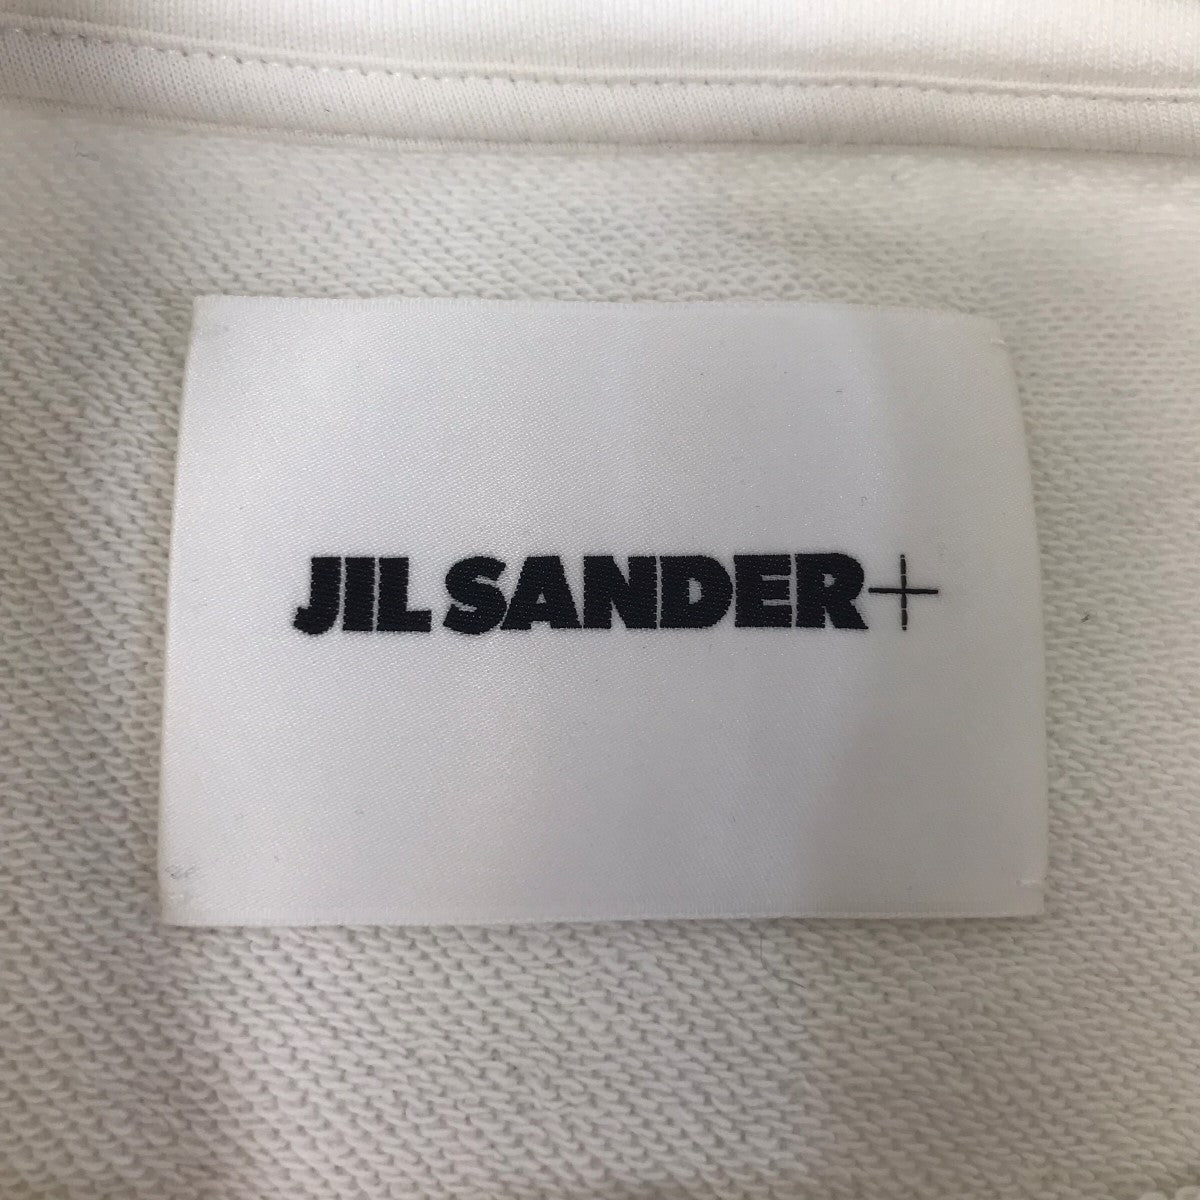 JIL SANDER+(ジルサンダープラス) オーバーサイズロゴスウェット ...